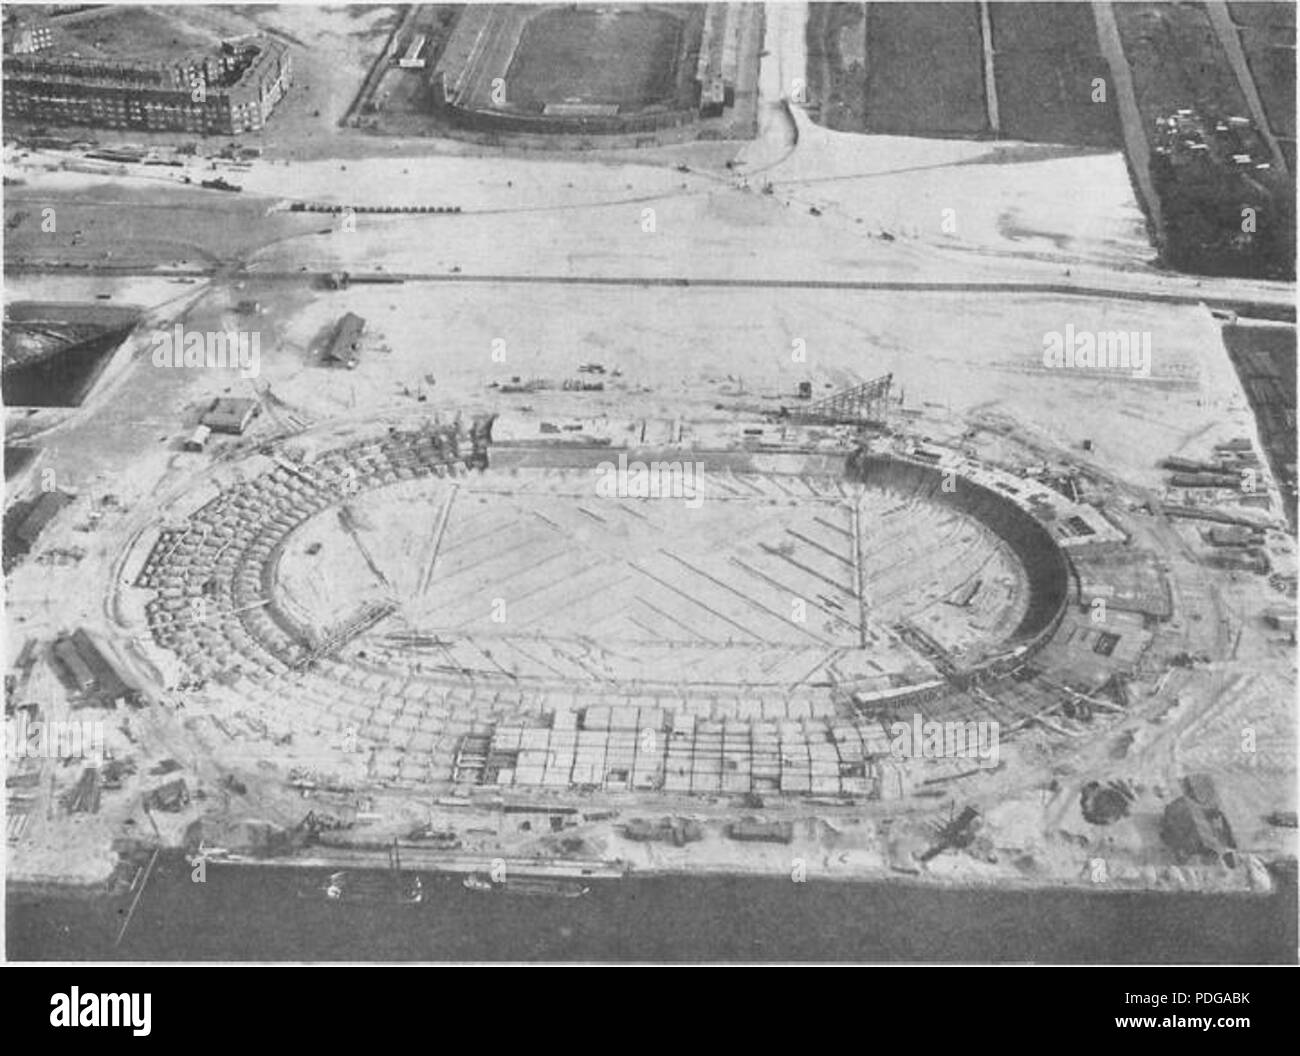 247 Olympisch Stadion Amsterdam under construction Stock Photo